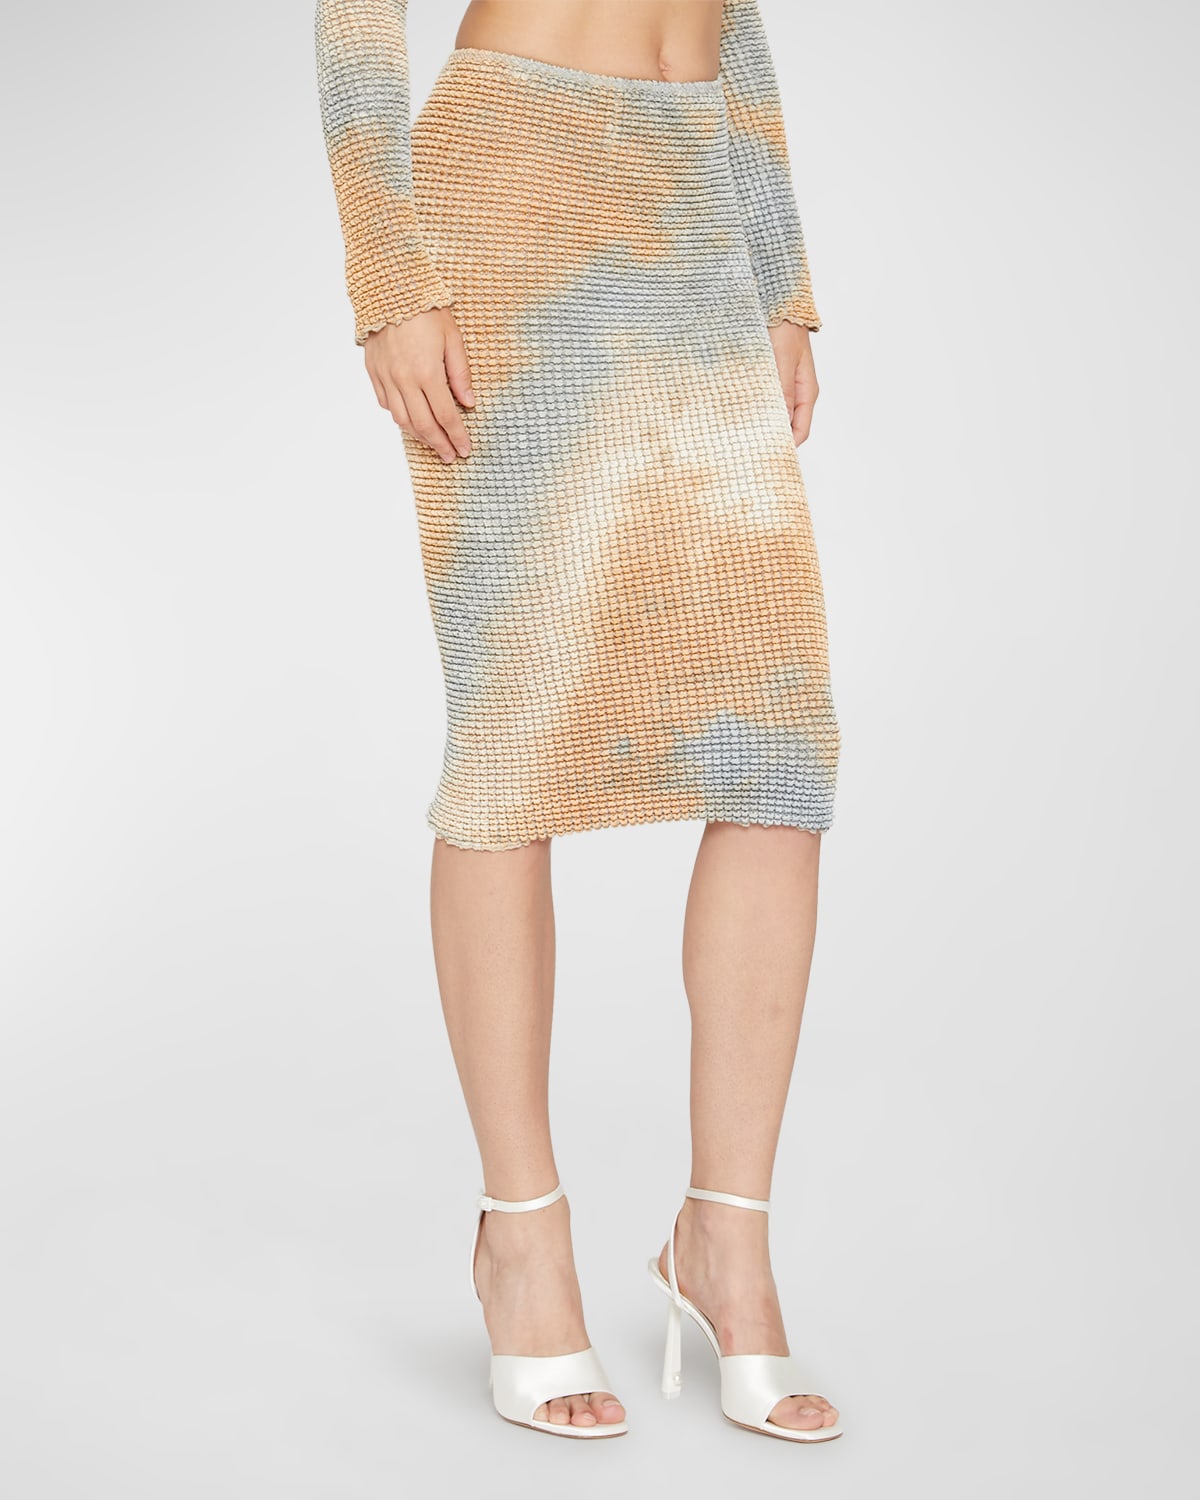 Smocked Tie-Dye Midi Skirt